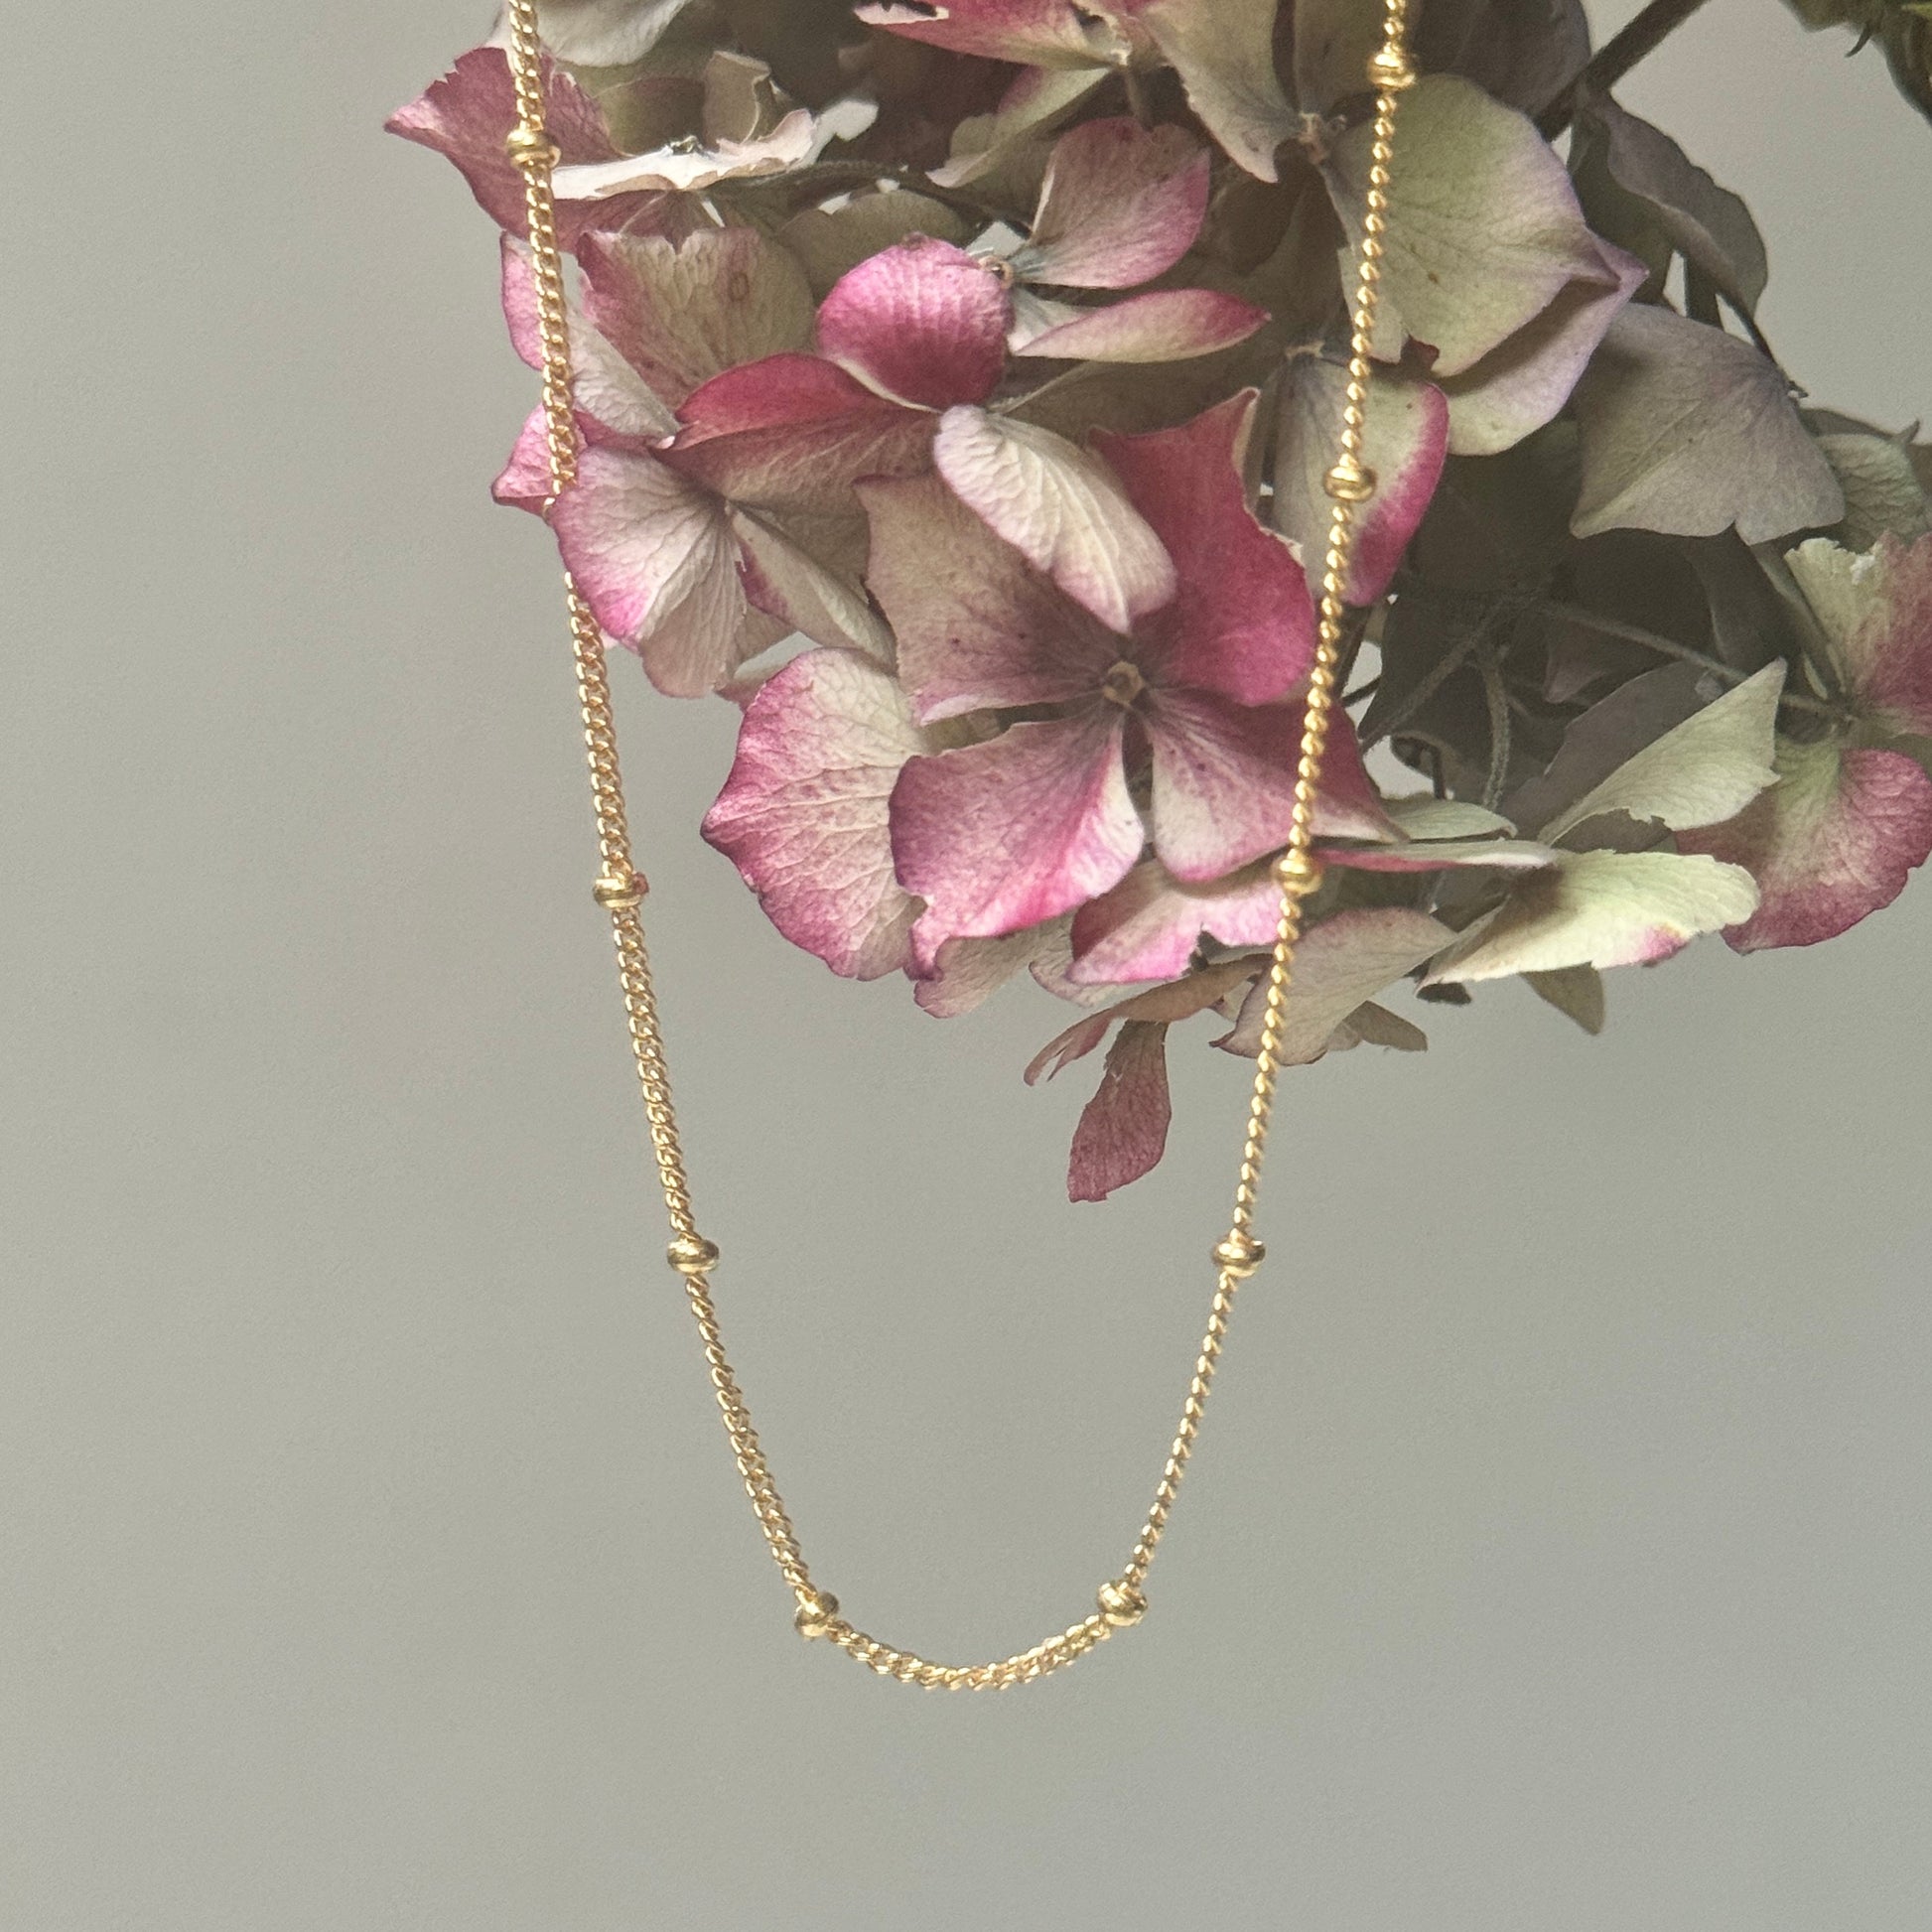 Freshwater Pearl (Midi Bead) Double Pendant Necklace